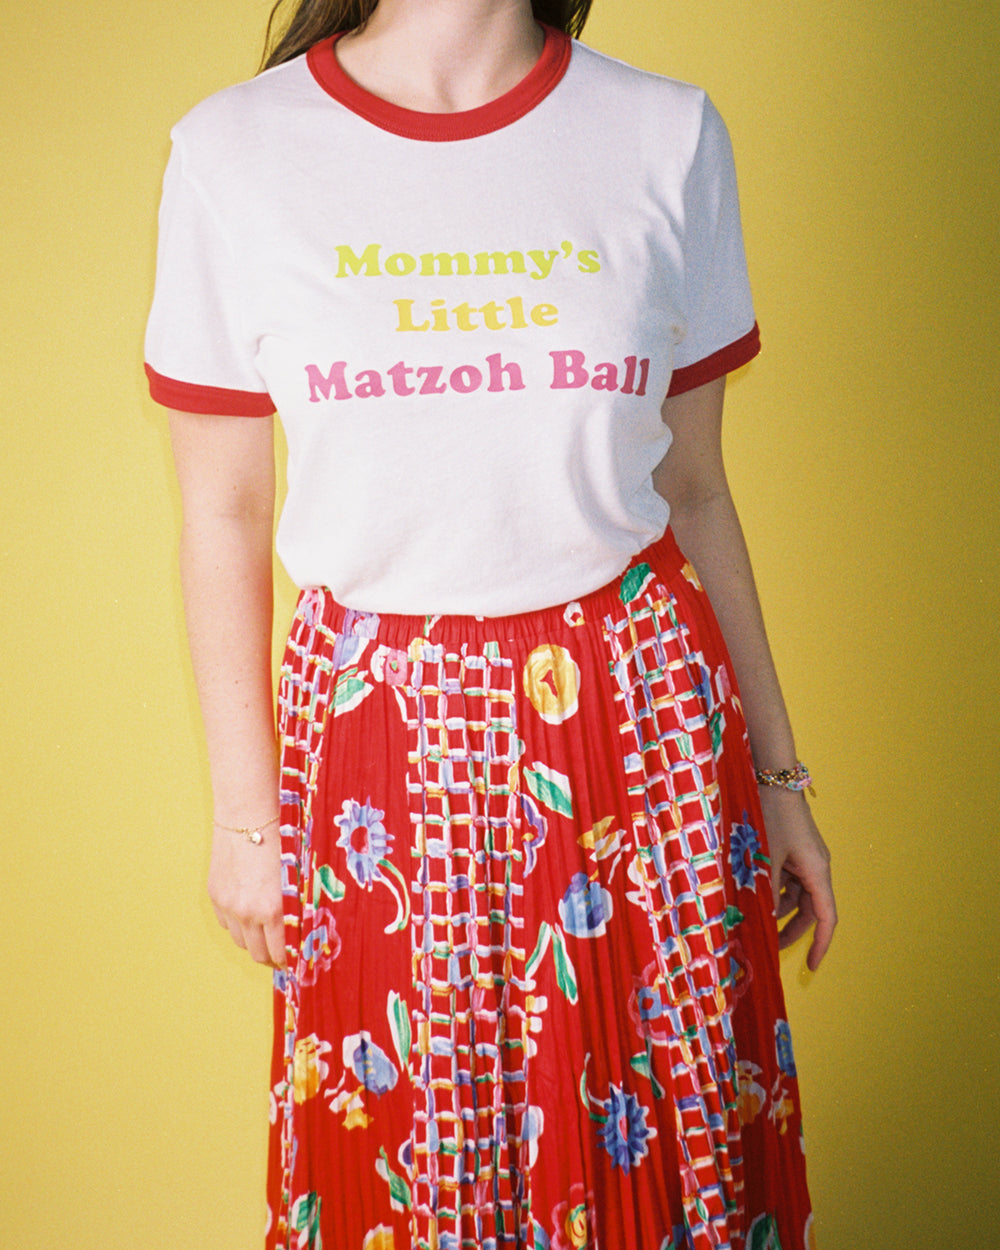 Mommy's Little Matzoh Ball Tee - Adult